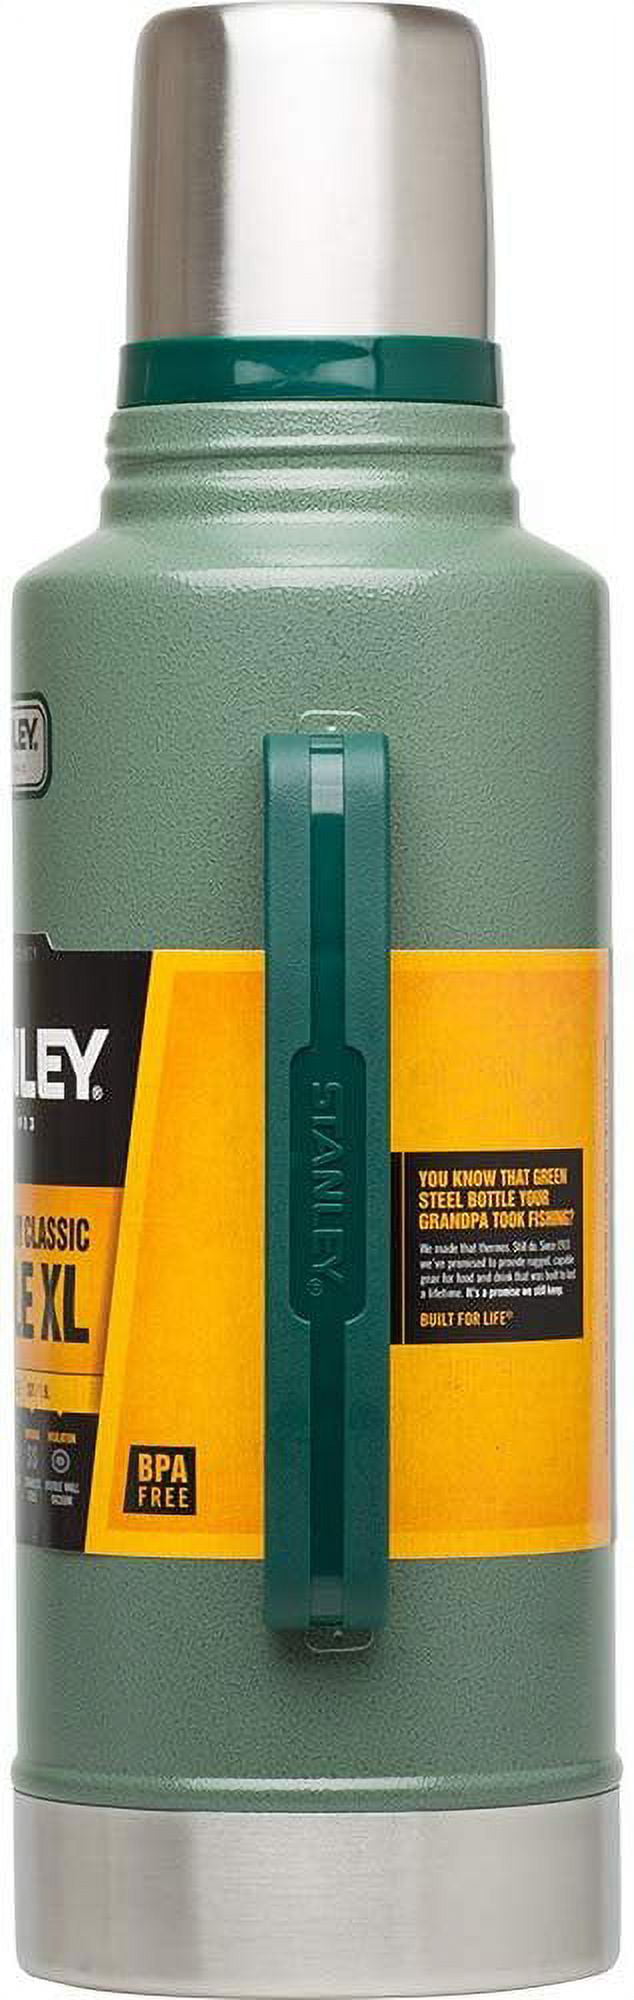 Stanley Classic Vacuum Bottle 2Qt, Hammertone Green